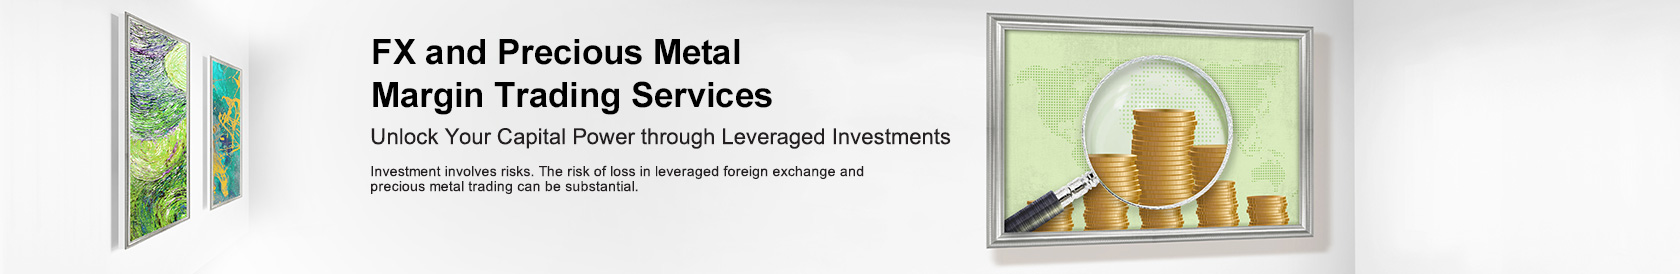 Forex investing leverage